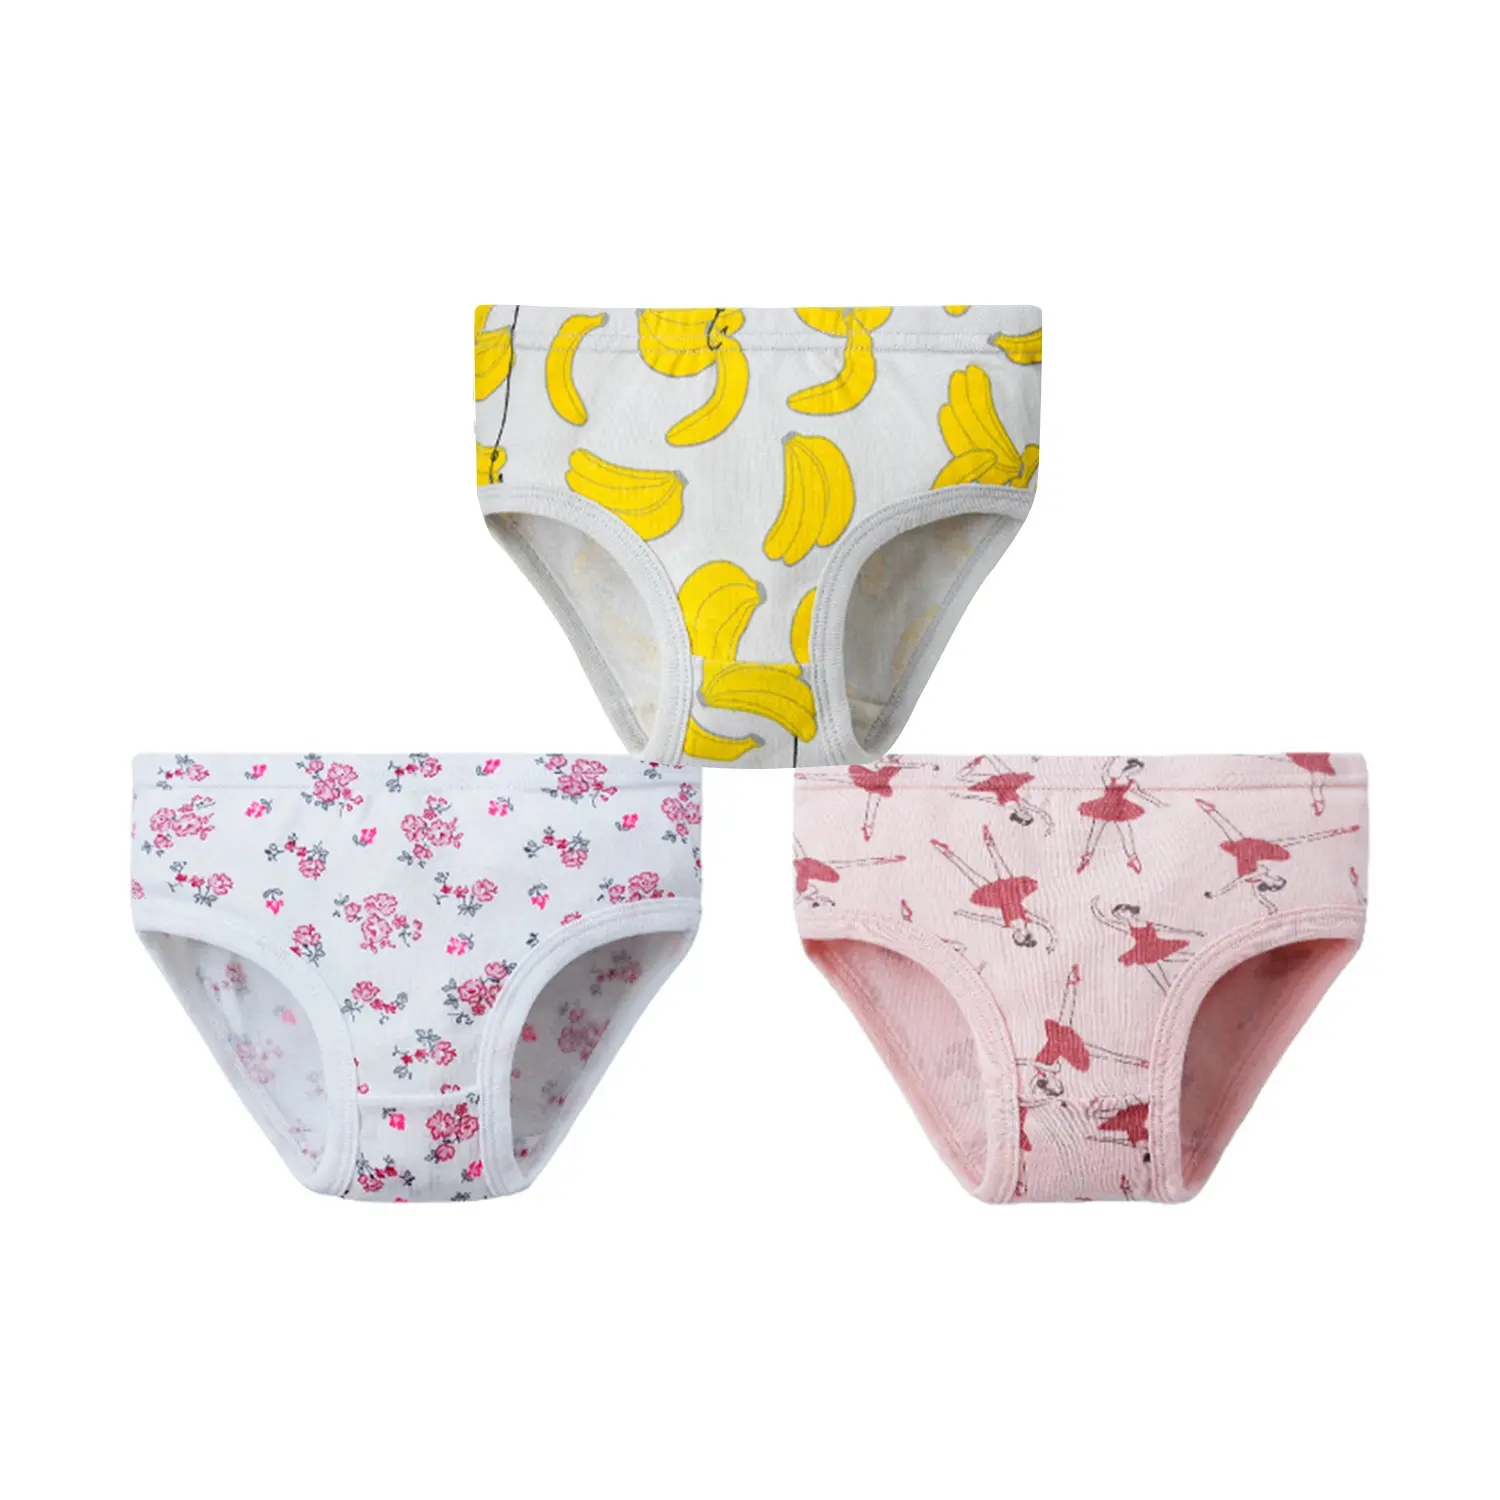 Wholesale/odm/oem Fancy Children Underwear Young Little Girl School Panties 100% Cotton Small Underwear for Girls Breathable